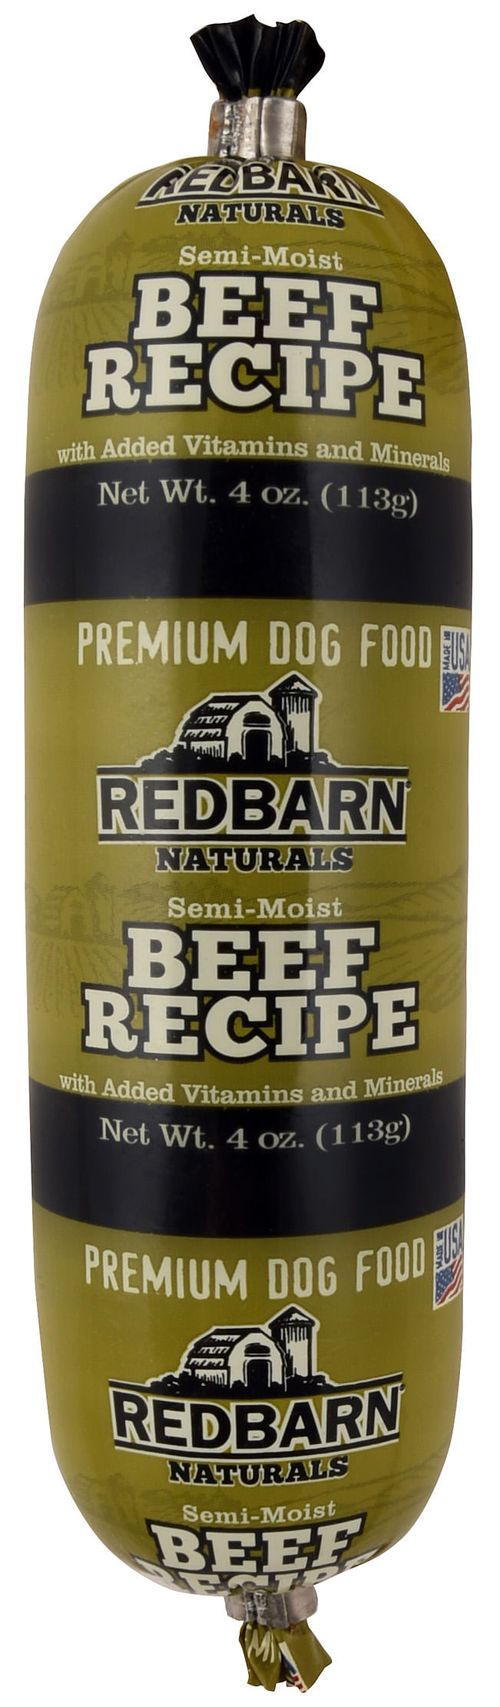 Redbarn Naturals Beef Recipe Dog Food Roll